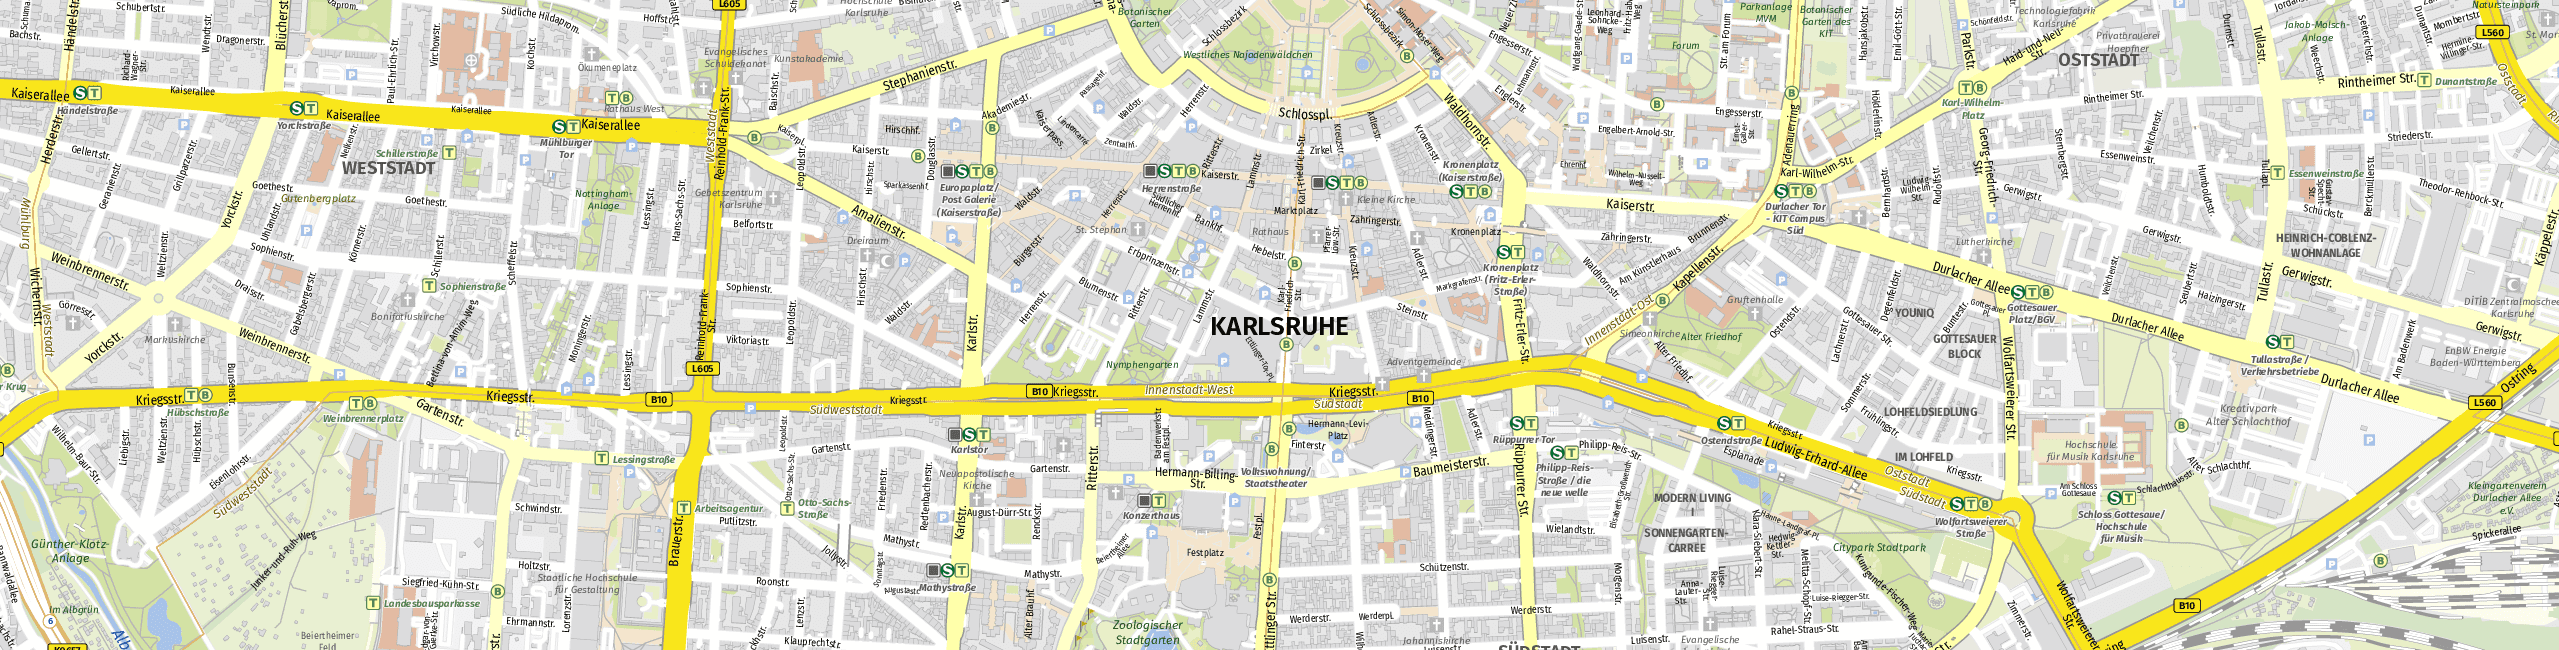 Stadtplan Karlsruhe zum Downloaden.